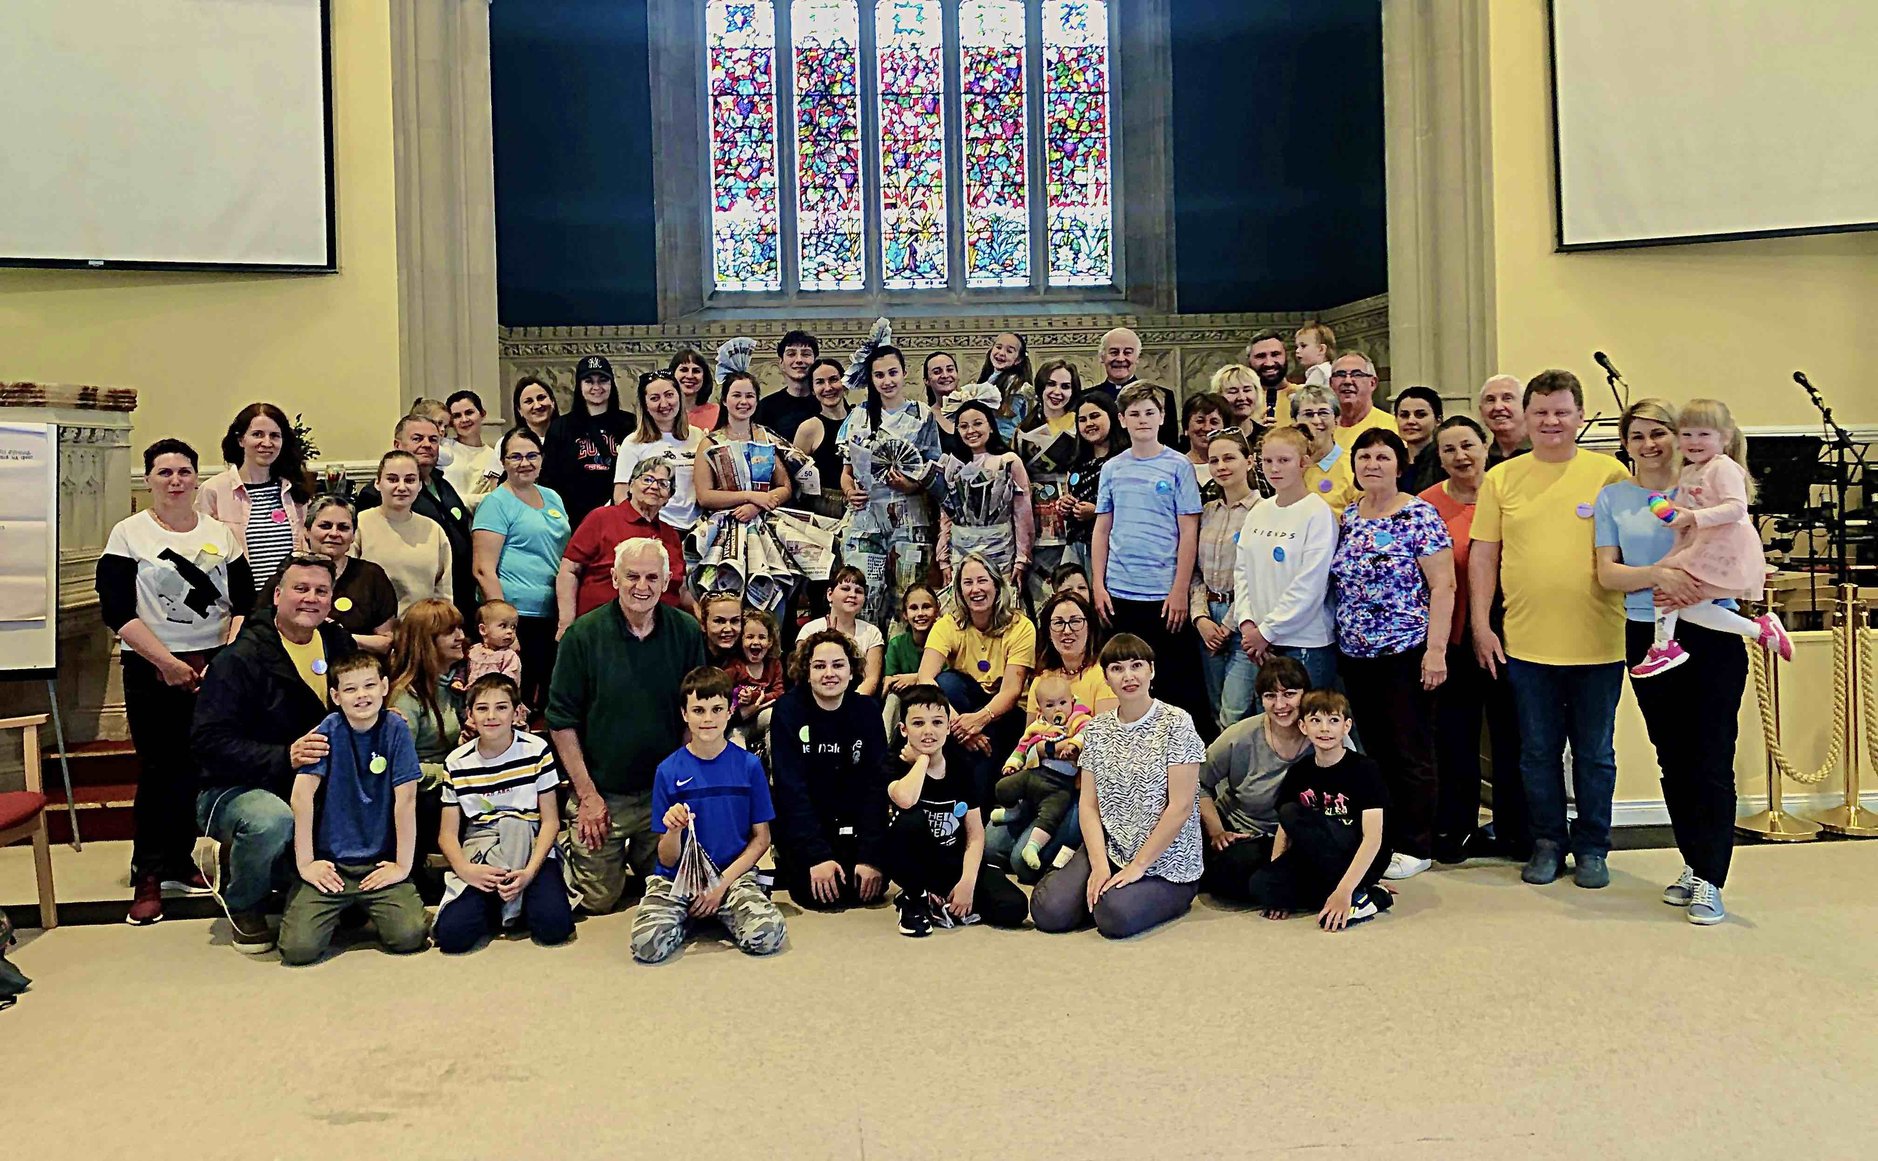 Bray church communities unite to welcome Ukrainian families